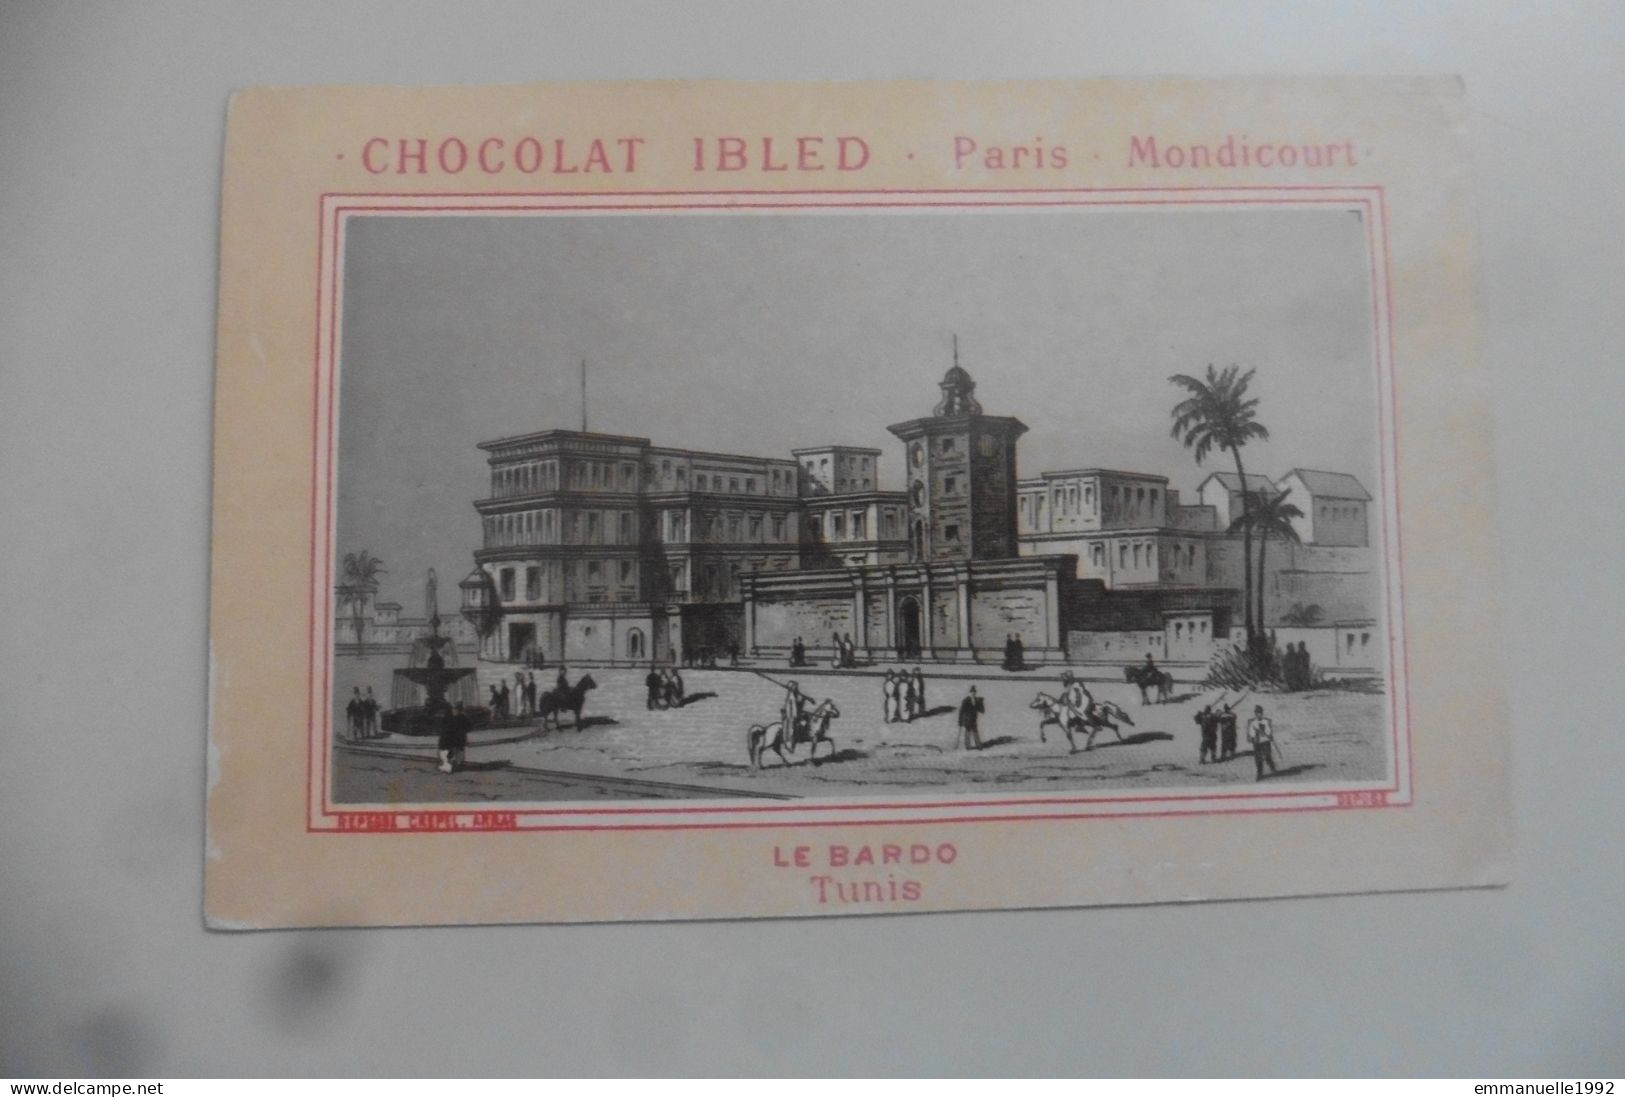 Chromo Chocolat Ibled Paris Mondicourt - Tunisie - Le Bardo, Tunis - Ibled